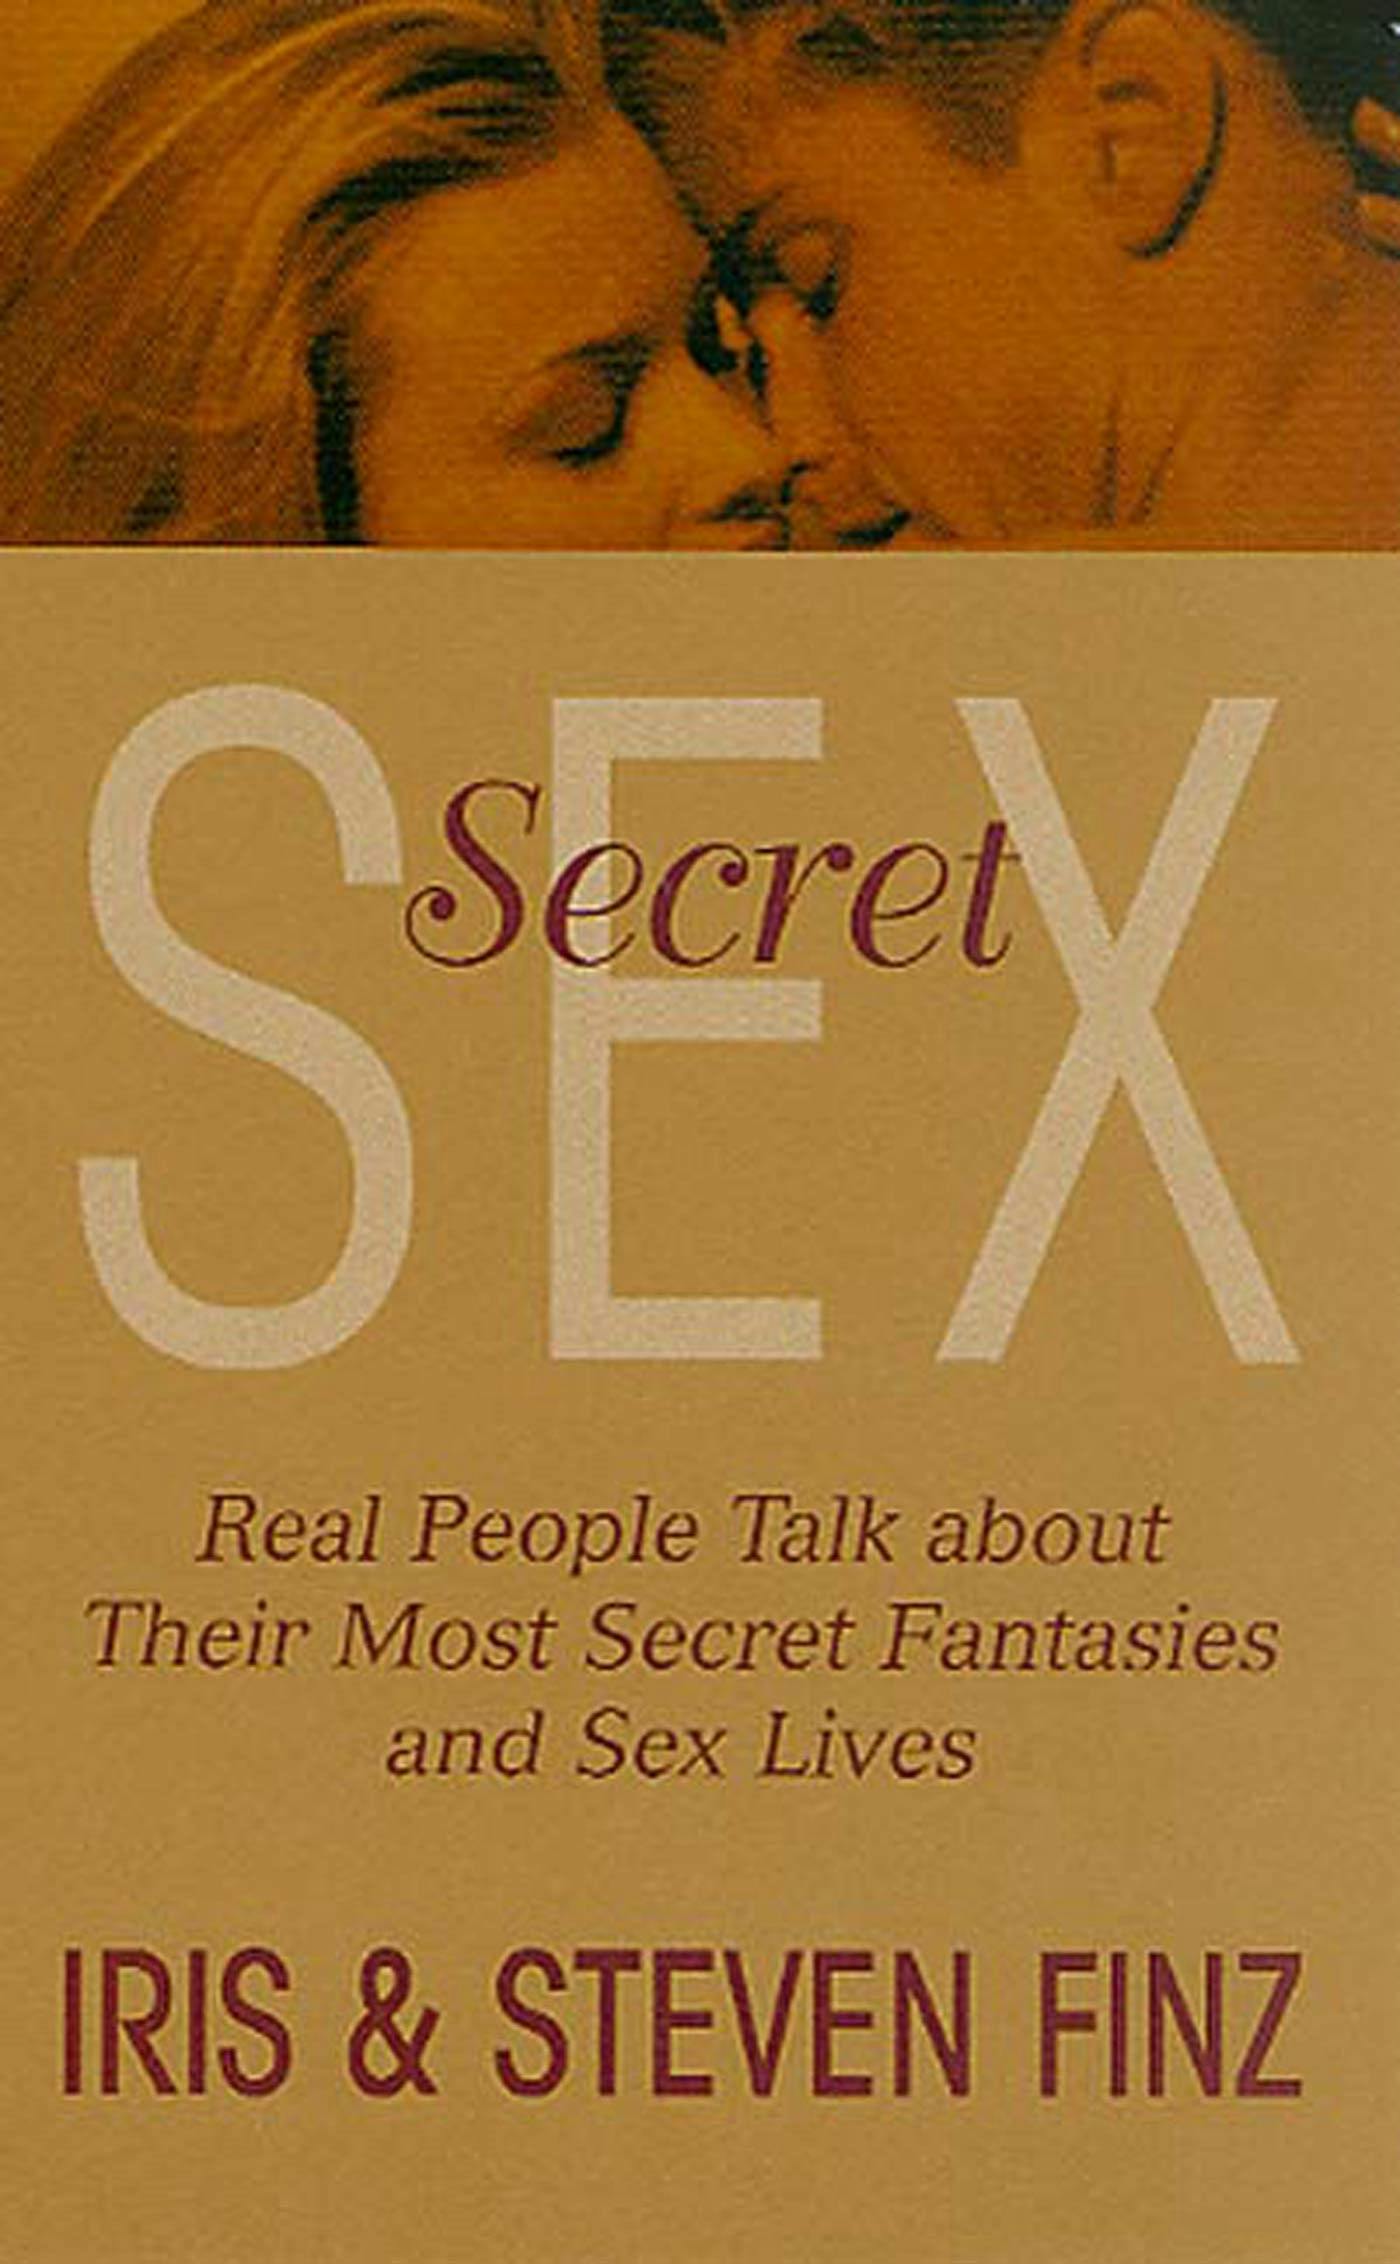 alex bloedel recommends People Having Sex Secretly